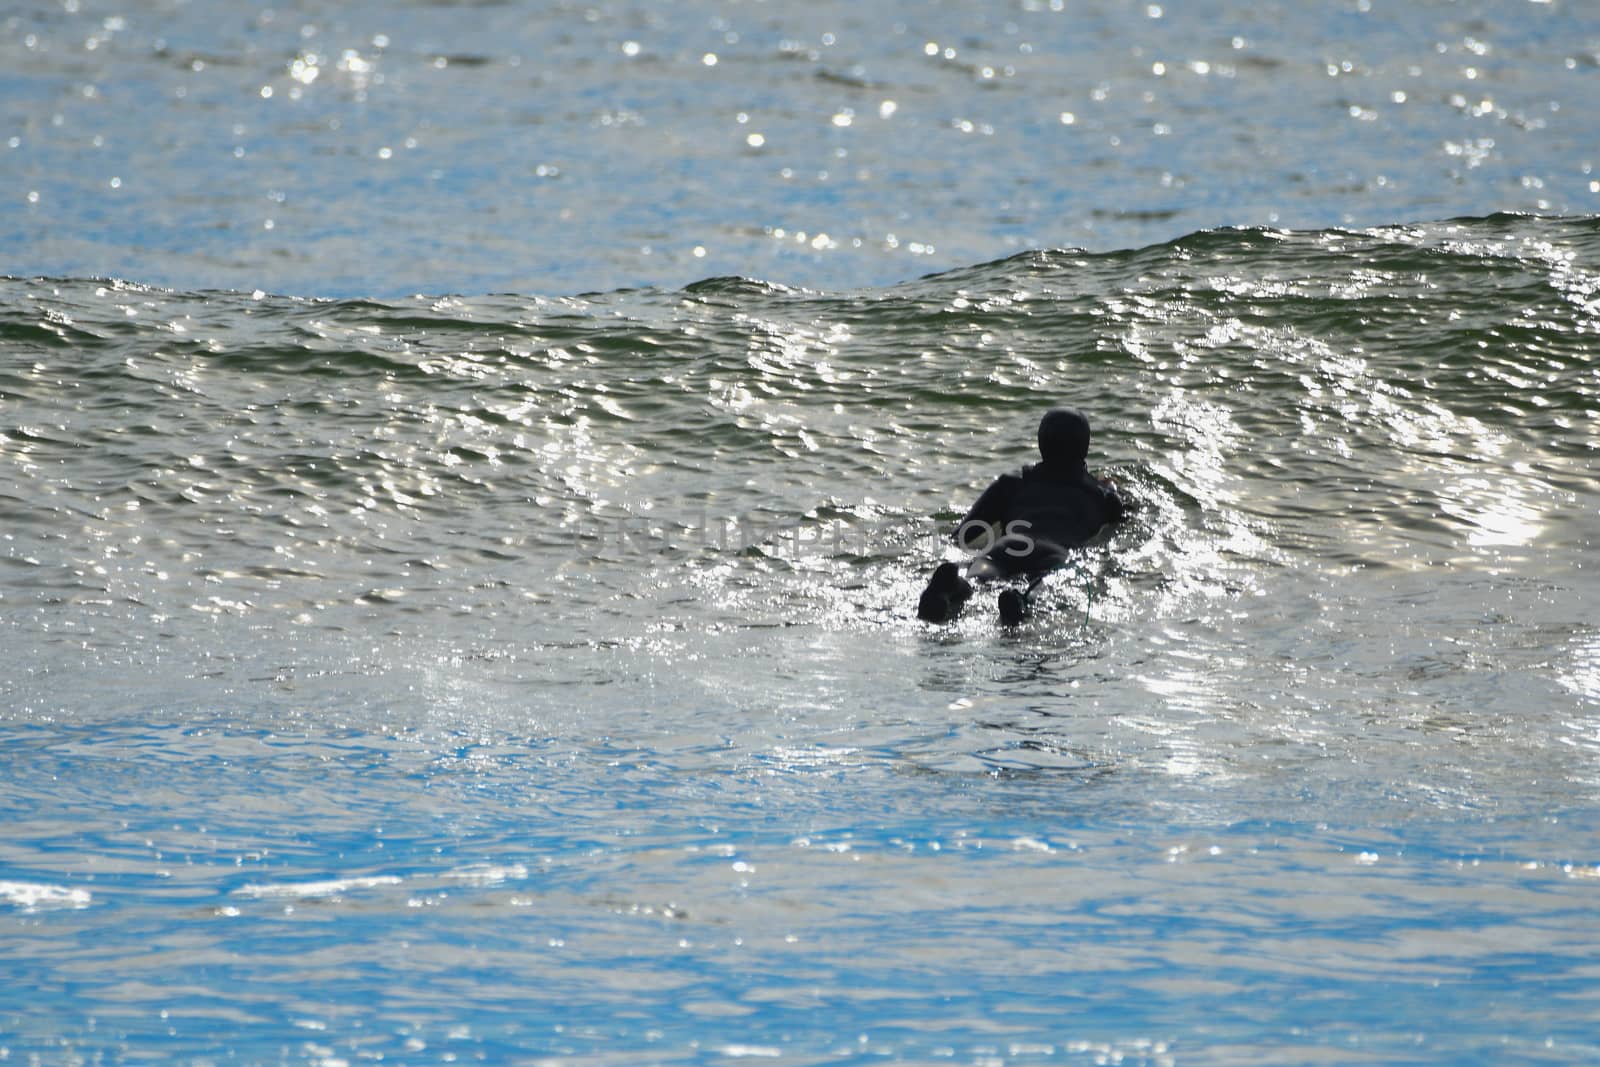 Surf at First Beach, Washington by cestes001